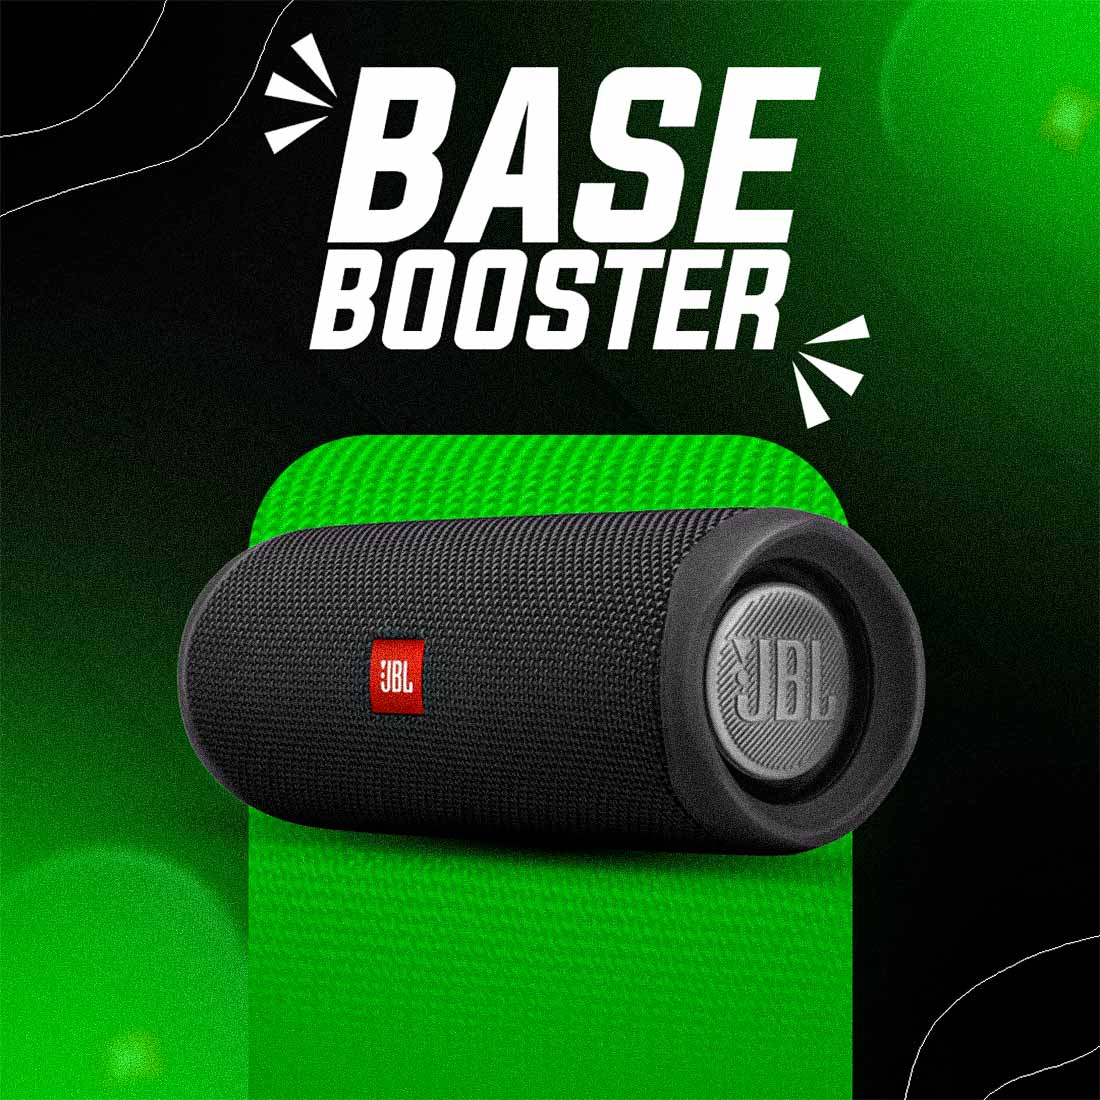 Green Minimalist Speaker Promotion Instagram Post preview image.